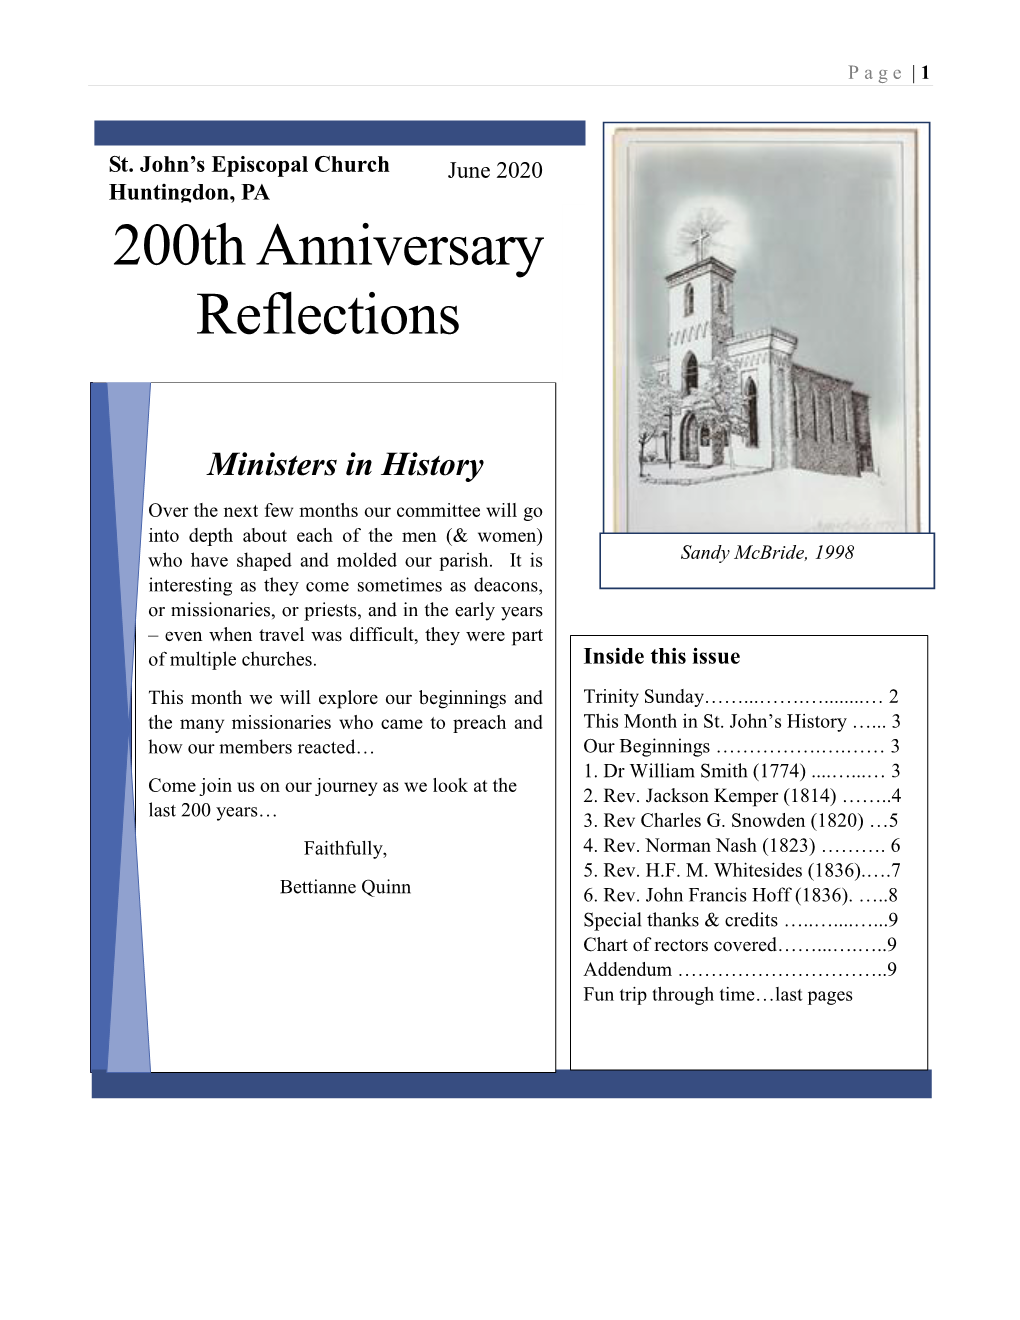 June 2020 Huntingdon, PA 200Th Anniversary Reflections